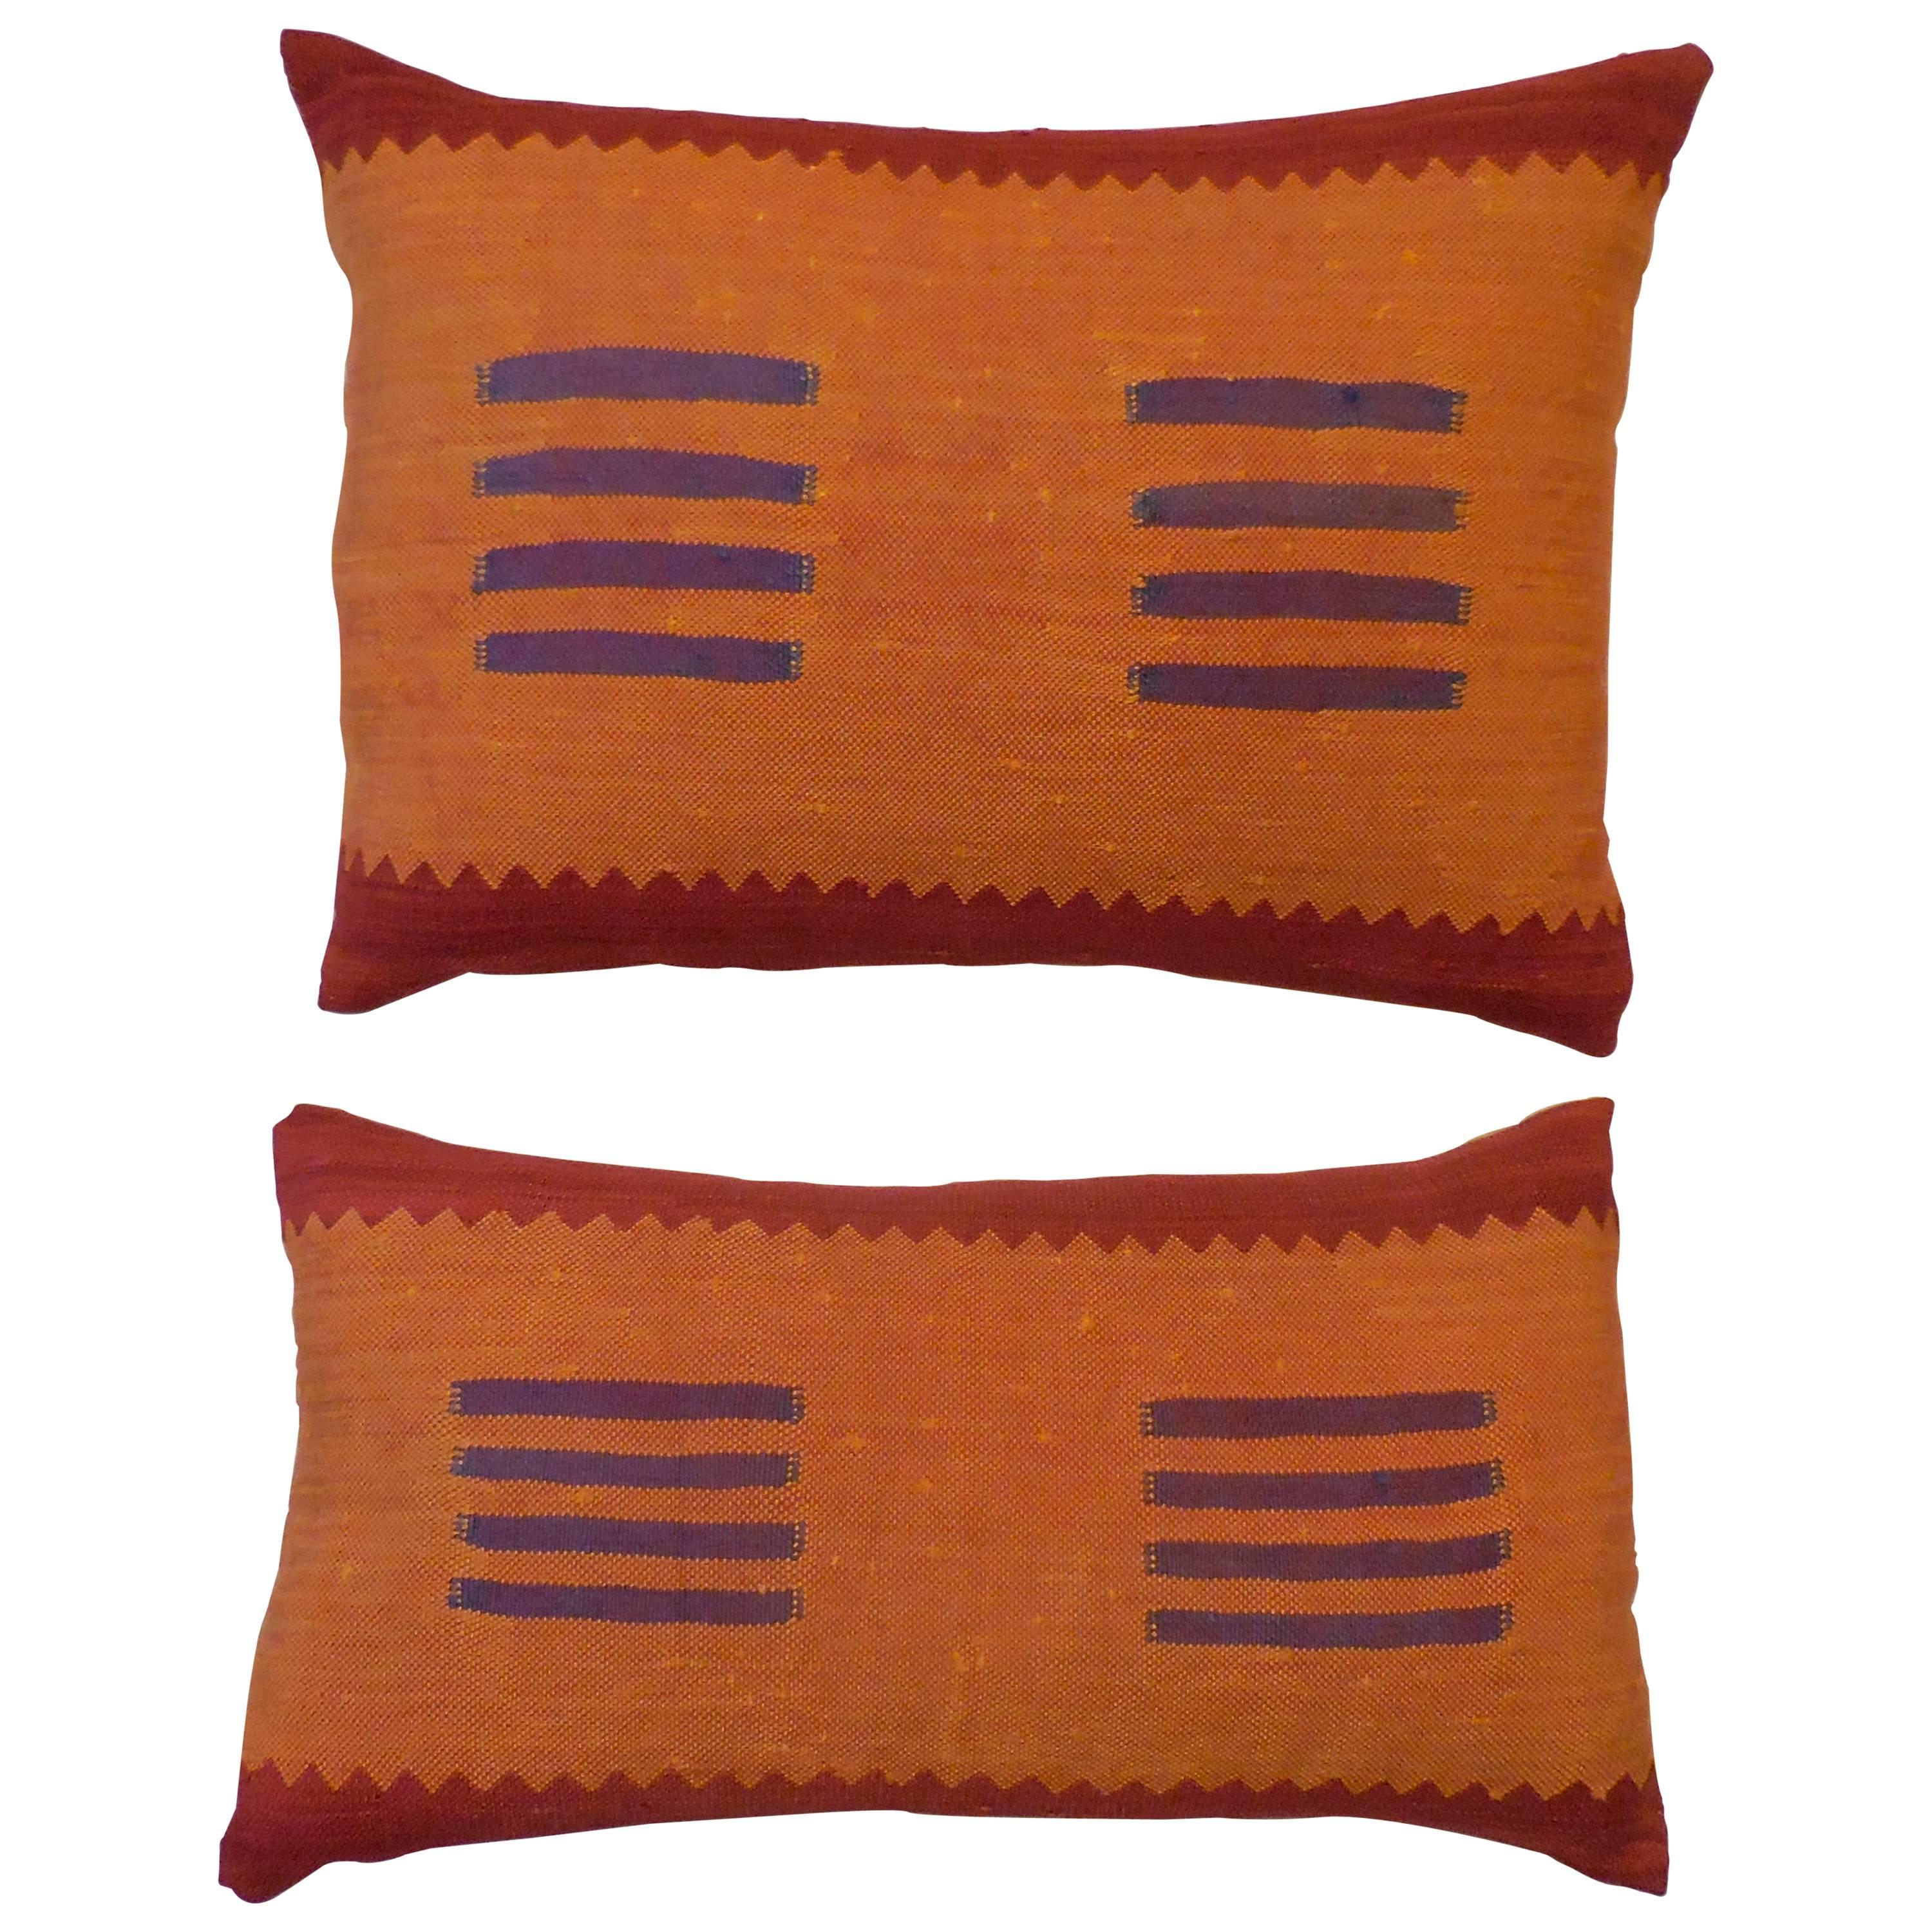 Pair of Silk Orange Pillows